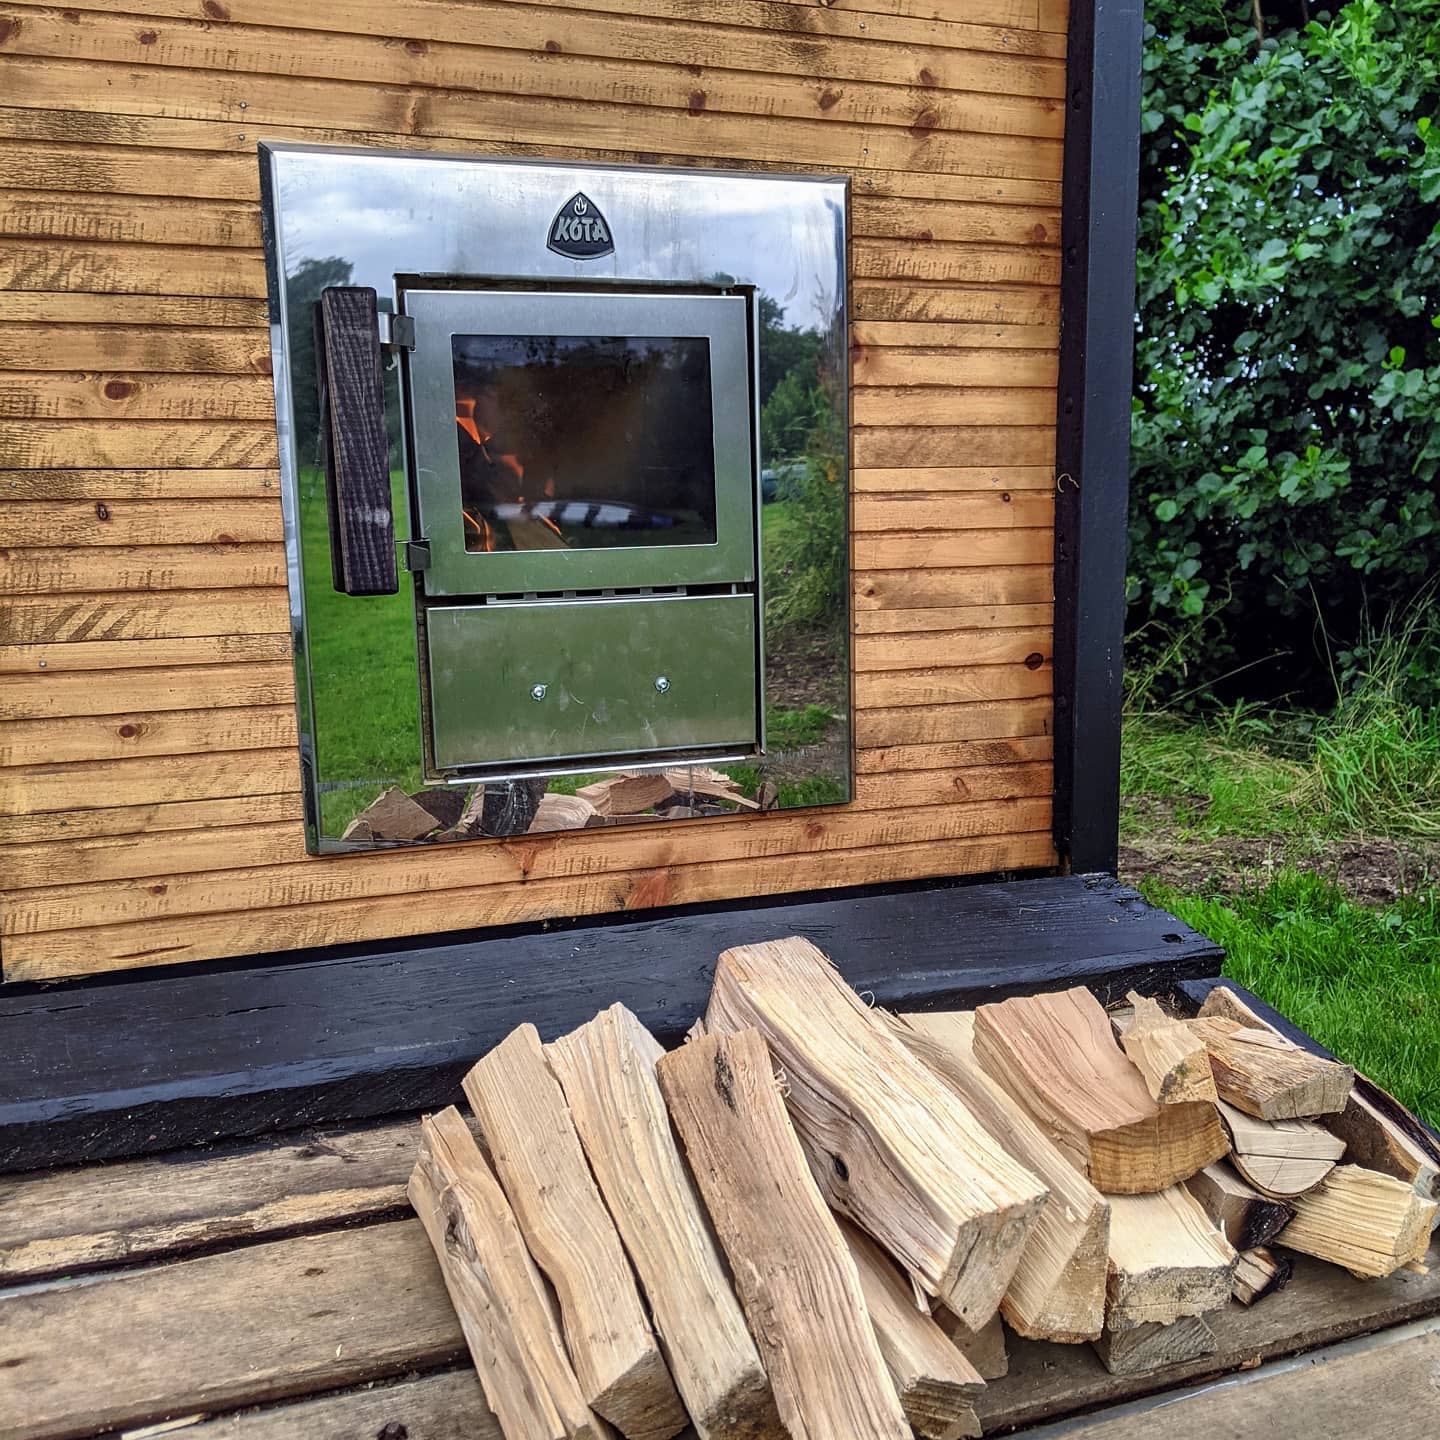 koa outside feed woodstove on rental sauna